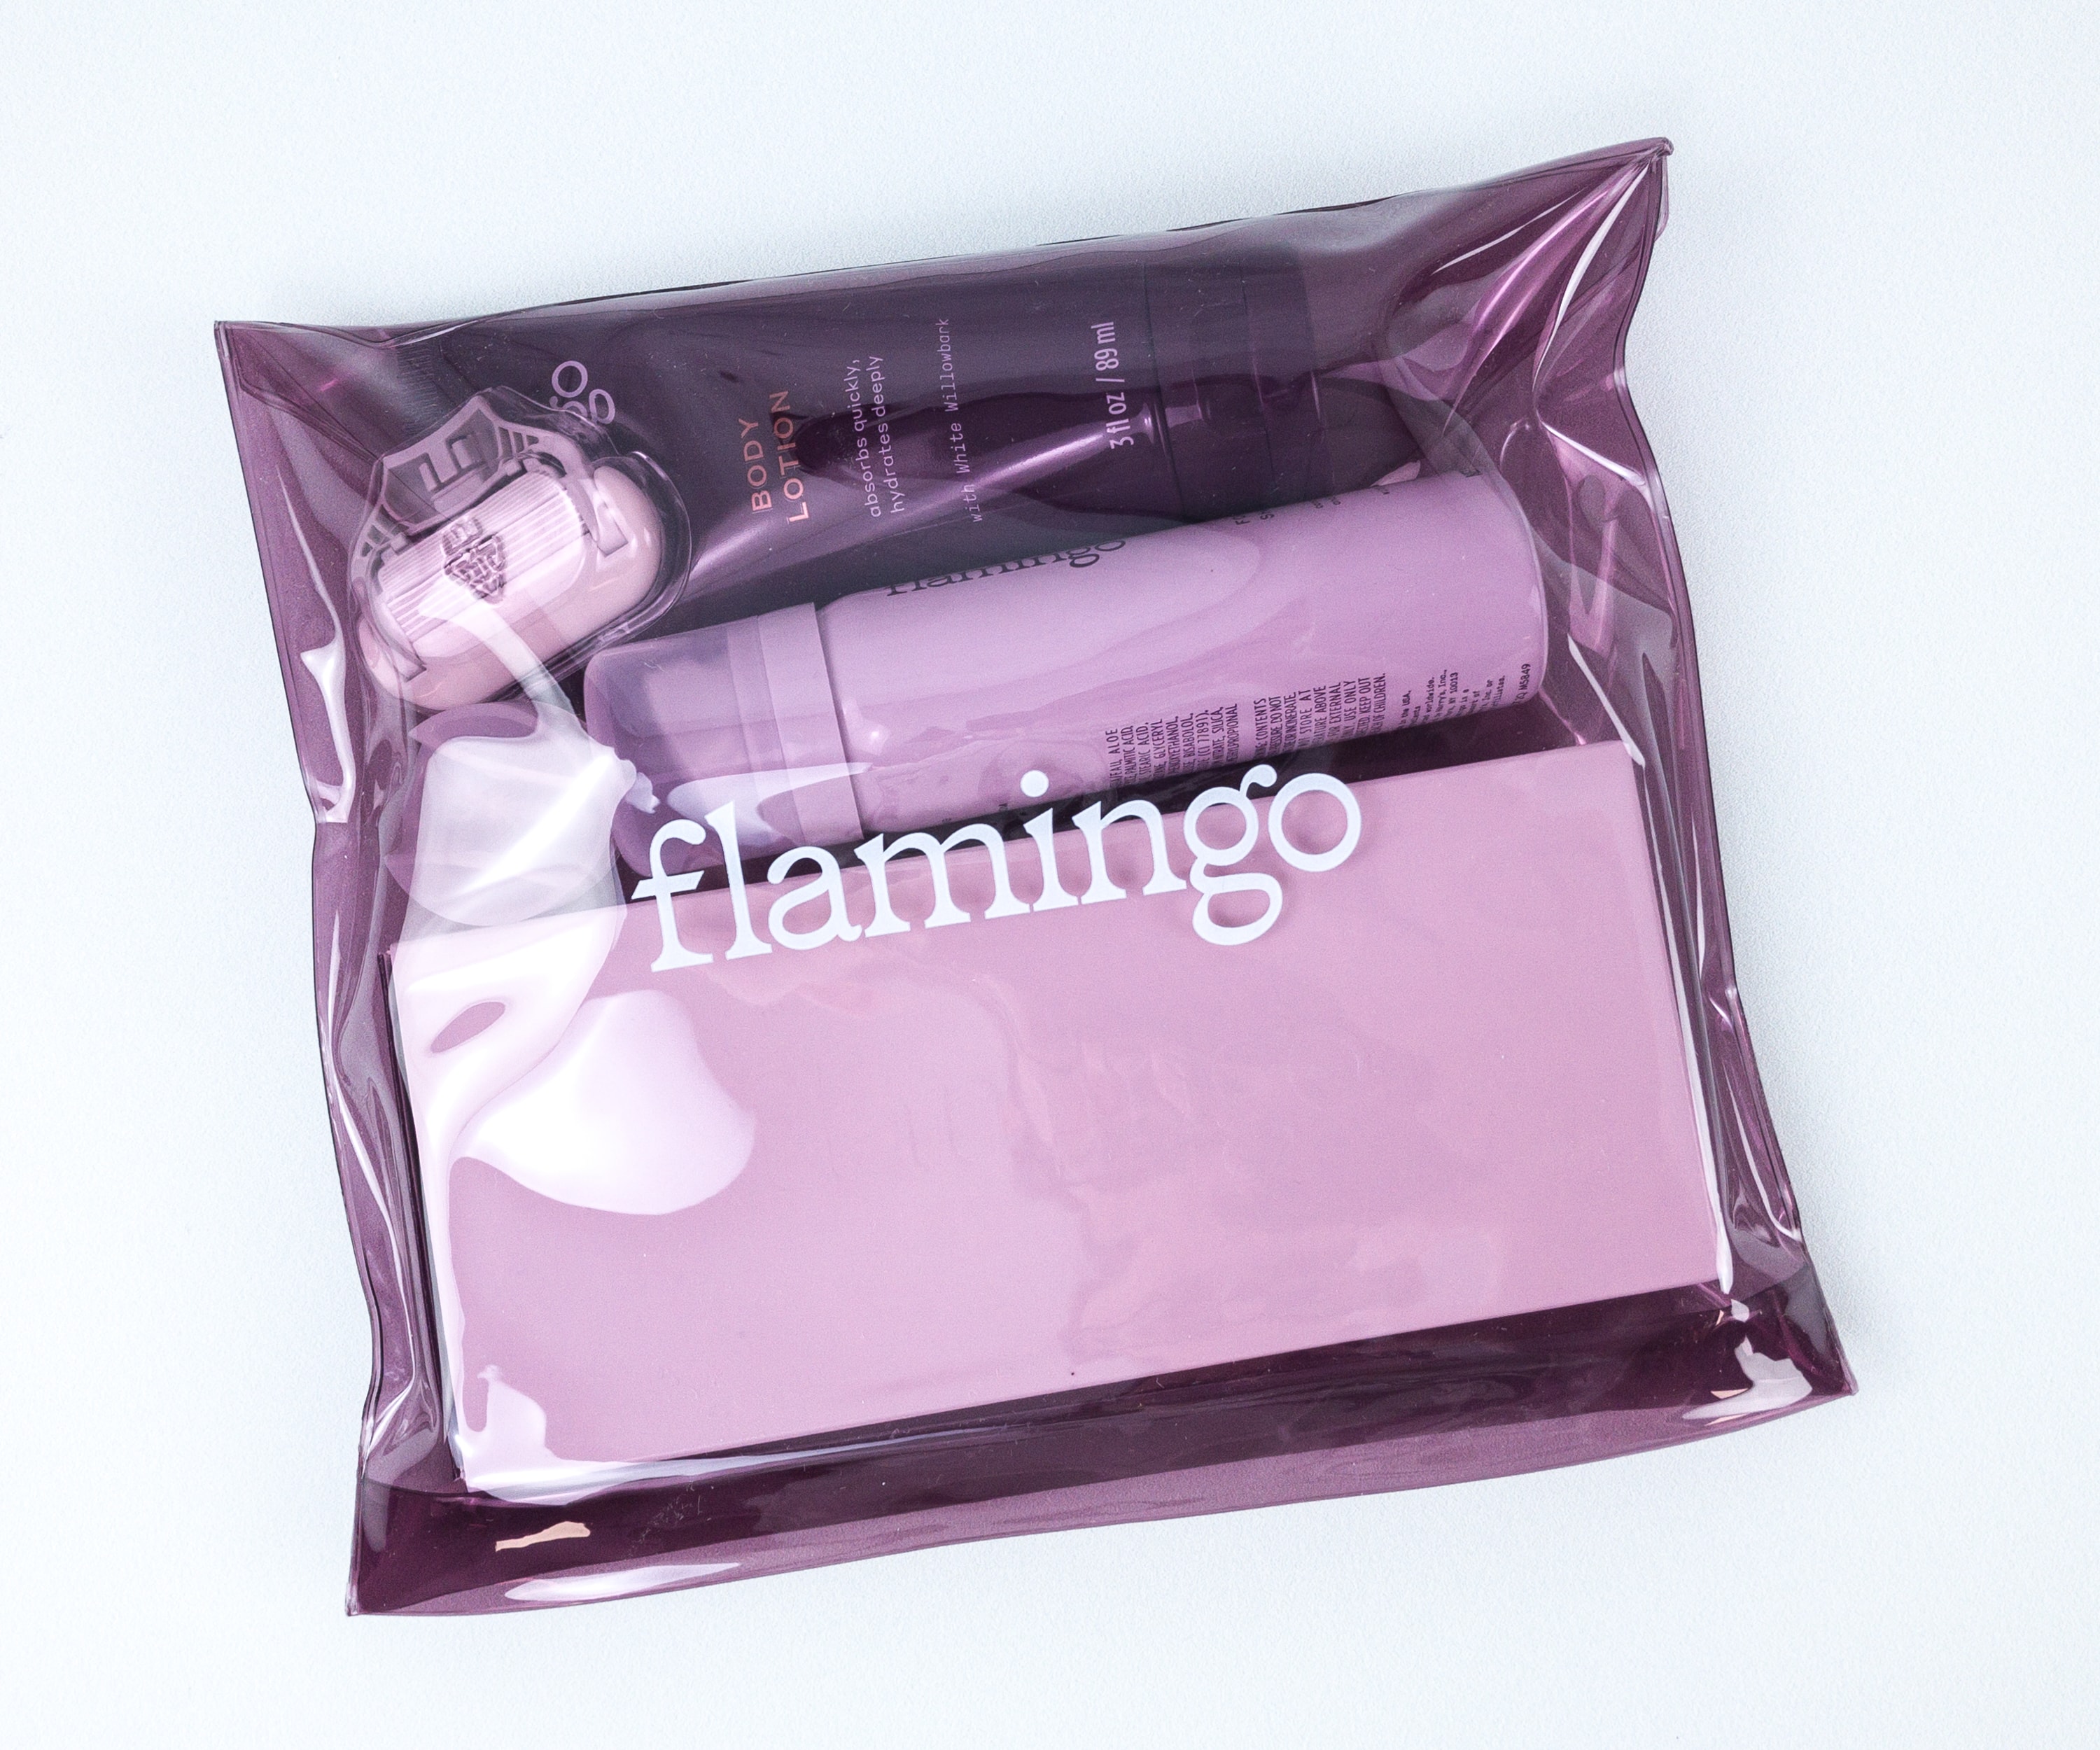 flamingo shave kit review